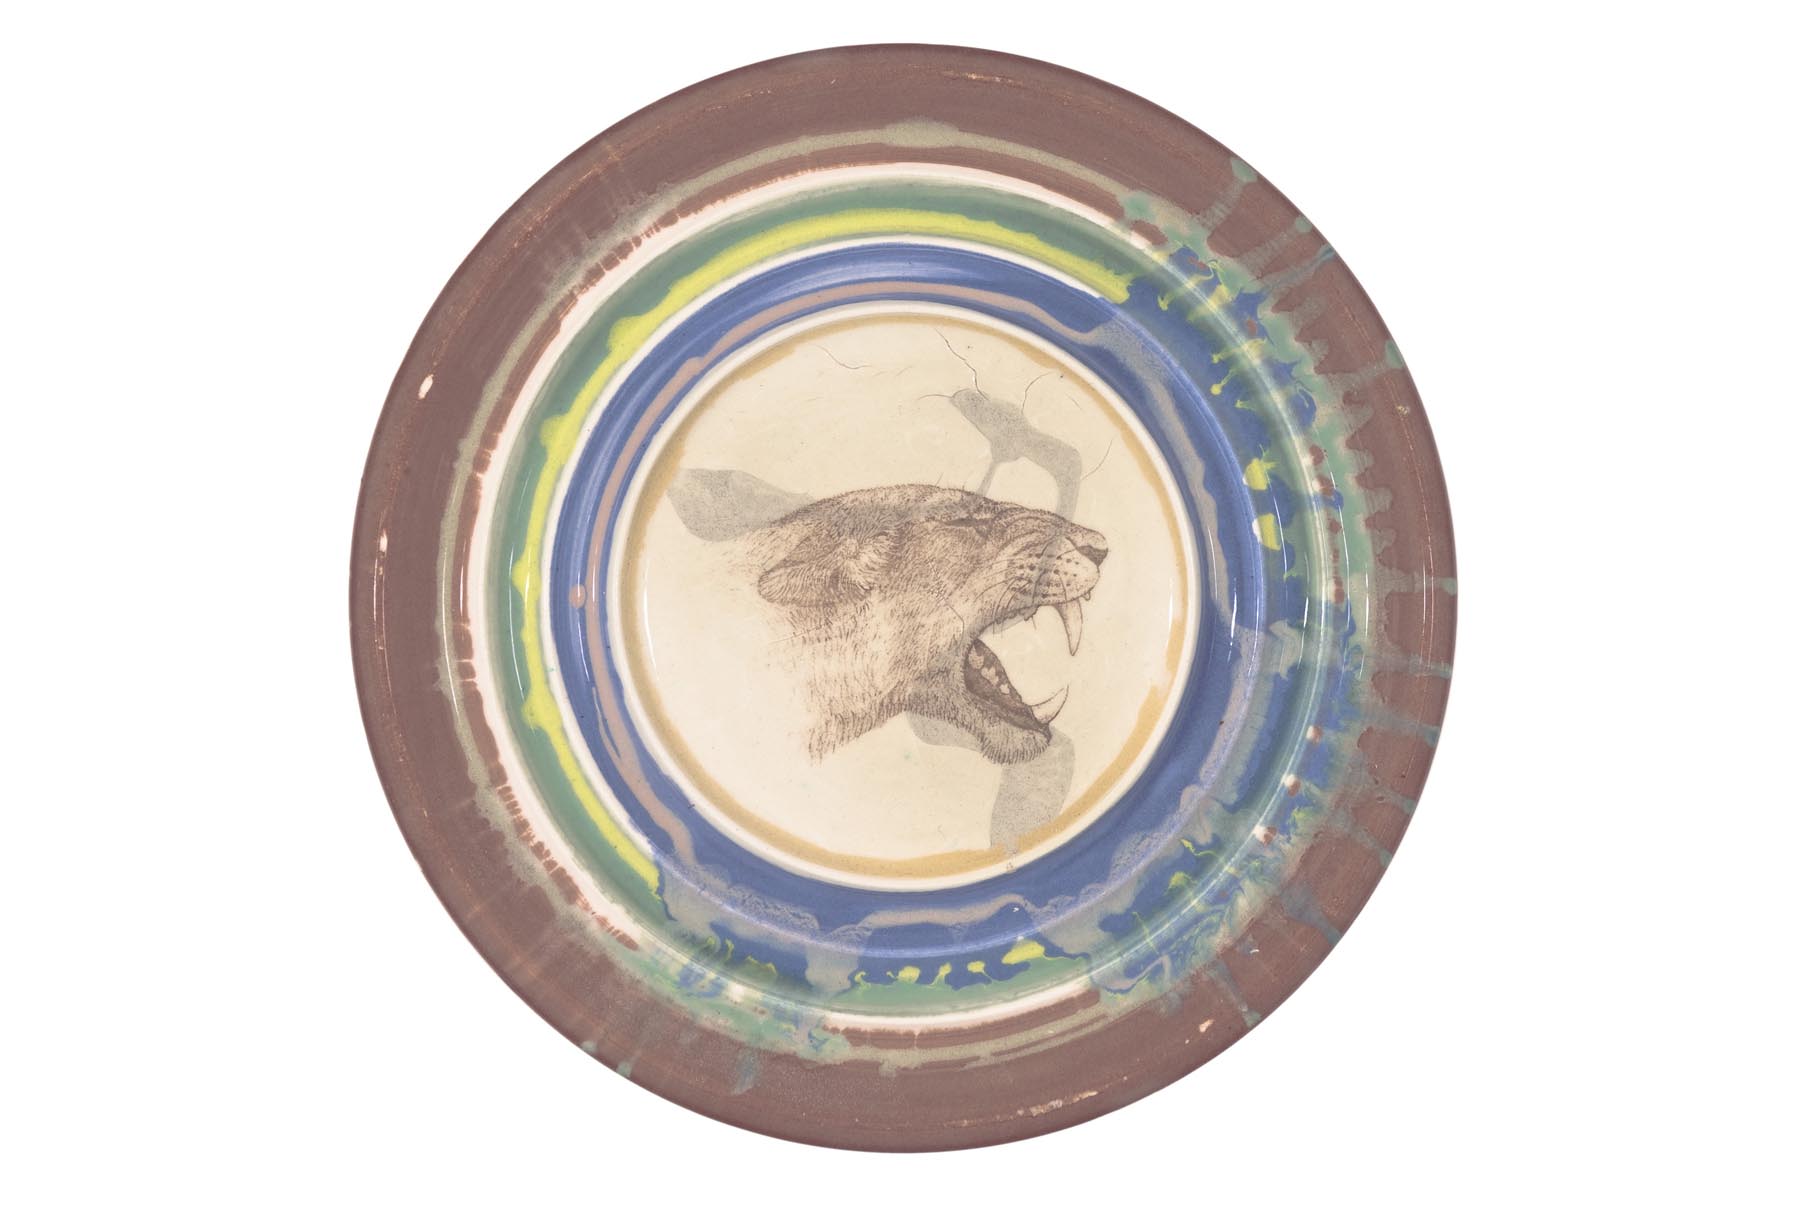      Cave lion   2002   slip decorated earthenware with photoceramic transfer   22cm diameter x 2 cm  